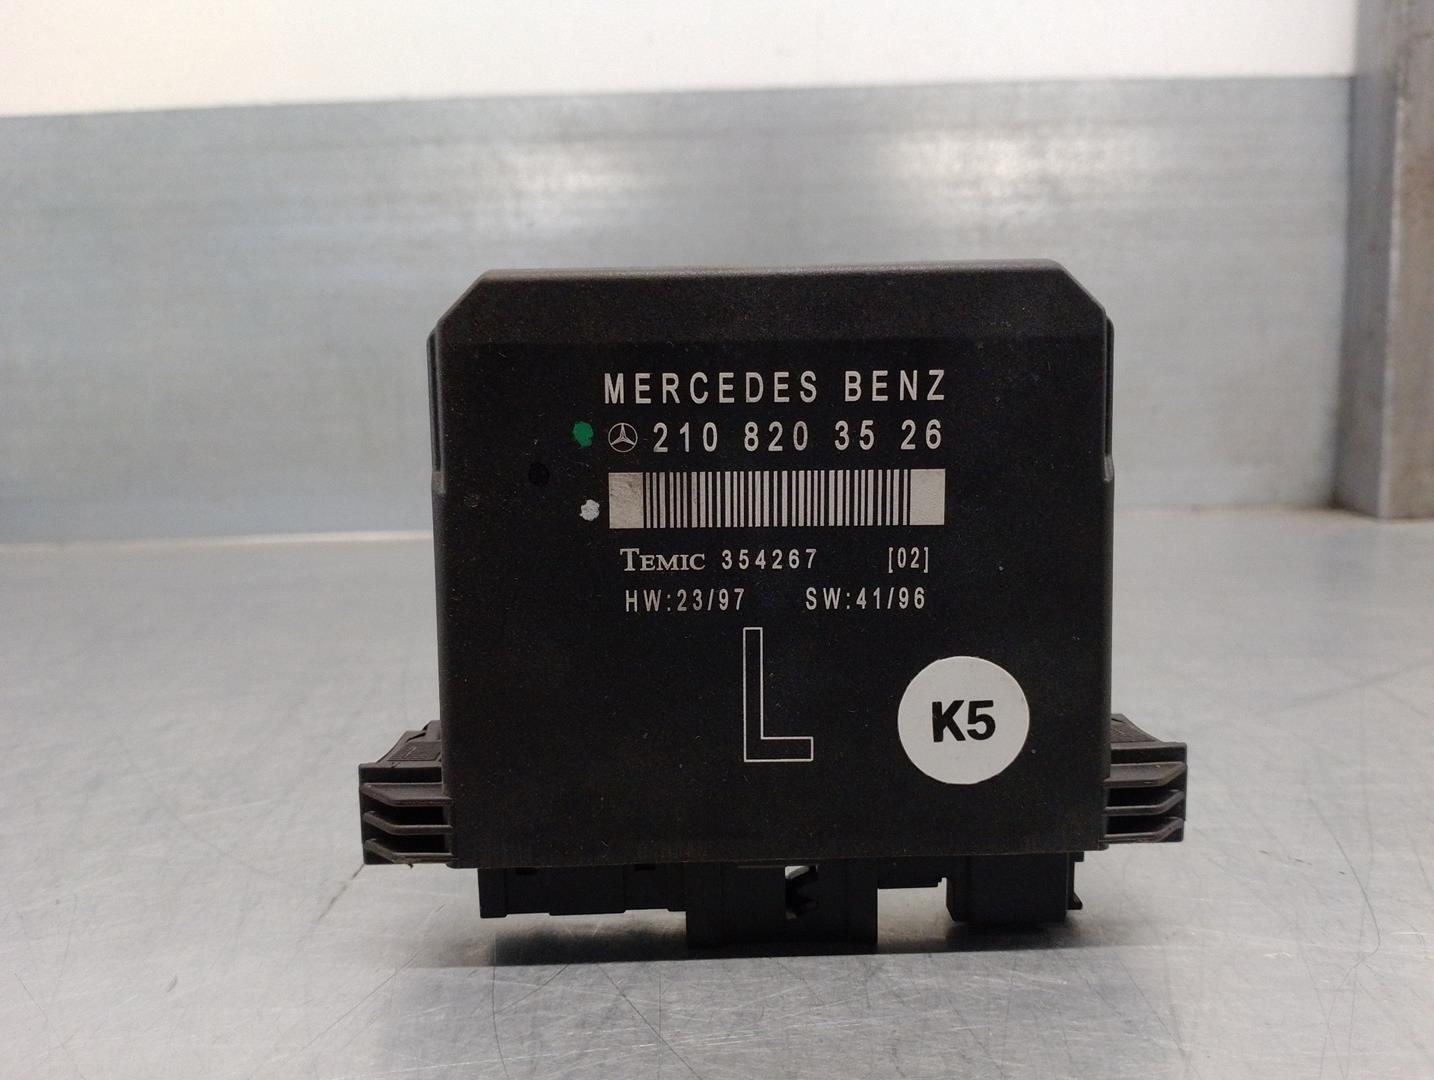 MERCEDES-BENZ C-Class W202/S202 (1993-2001) Kiti valdymo blokai 2108203526, 354267, TEMIC 21721518